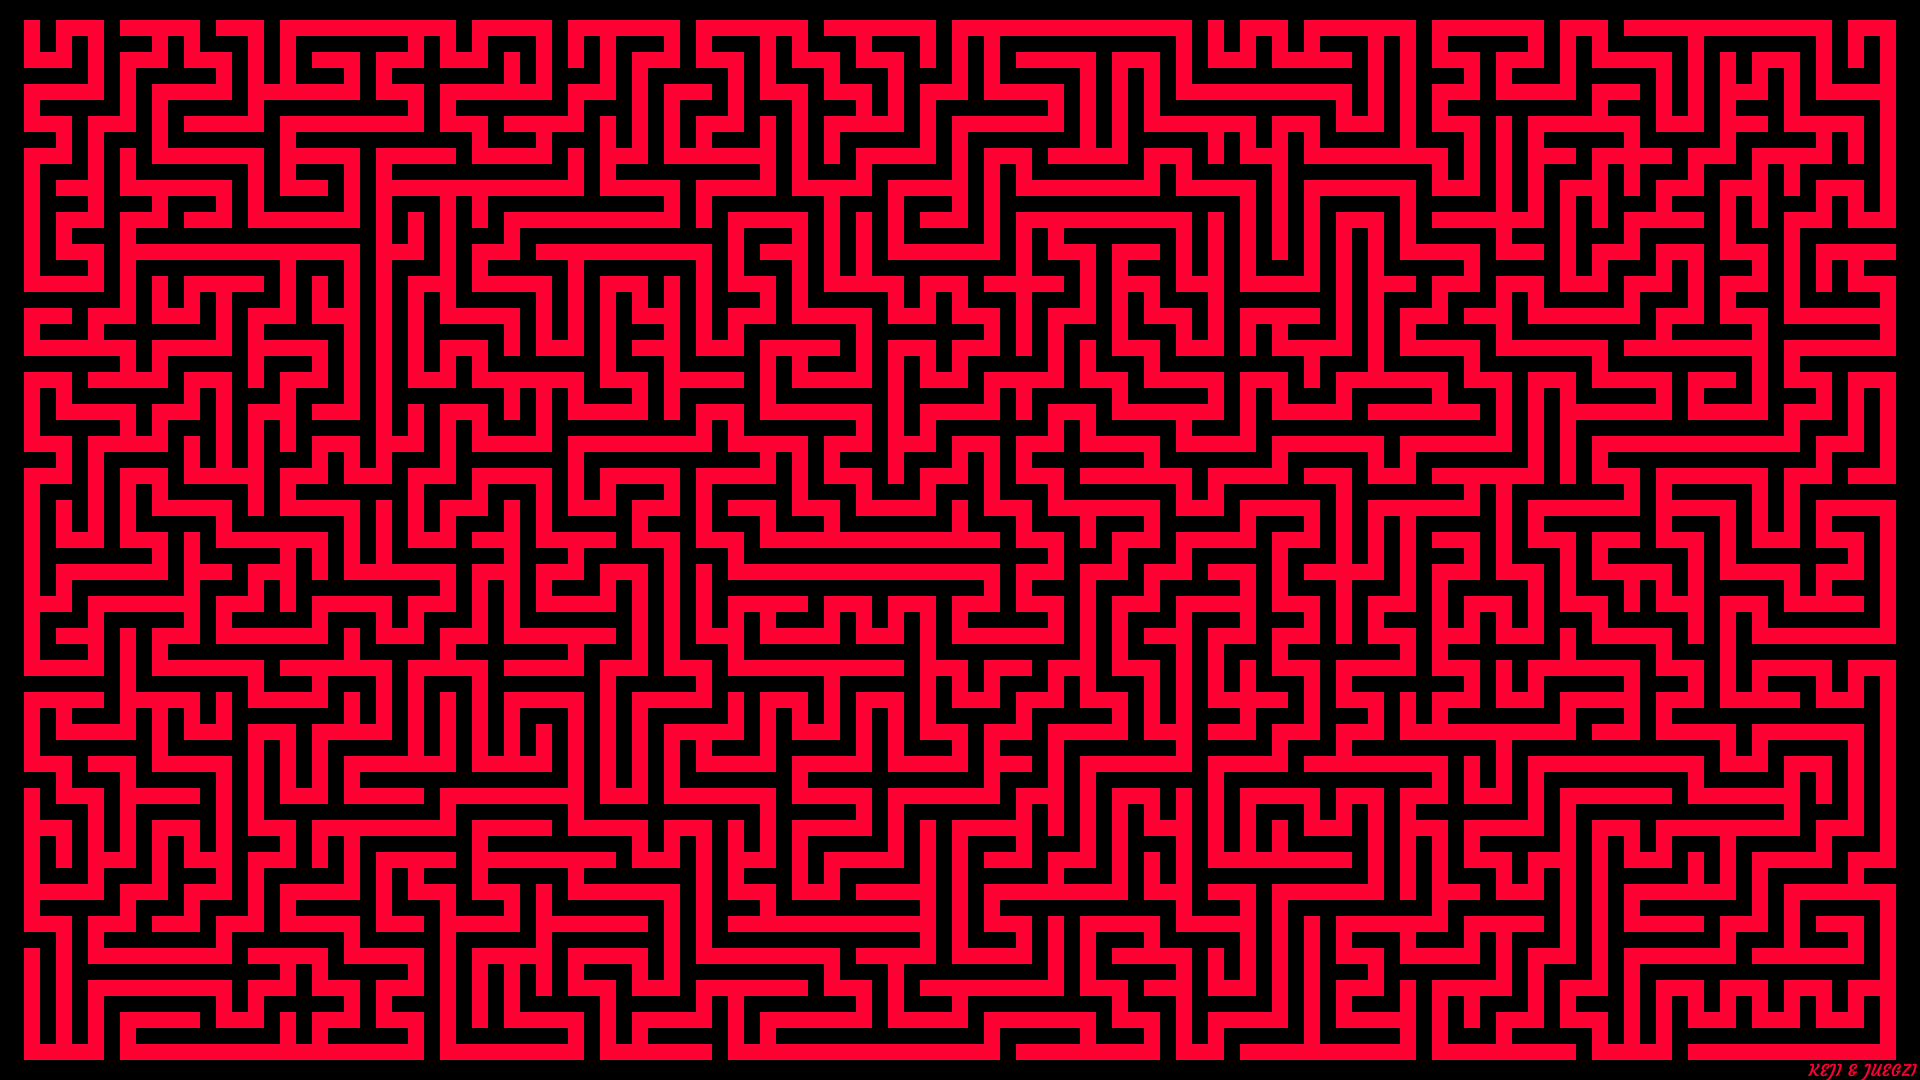 Abstract Artistic Digital Art Maze Pattern Red 1920x1080